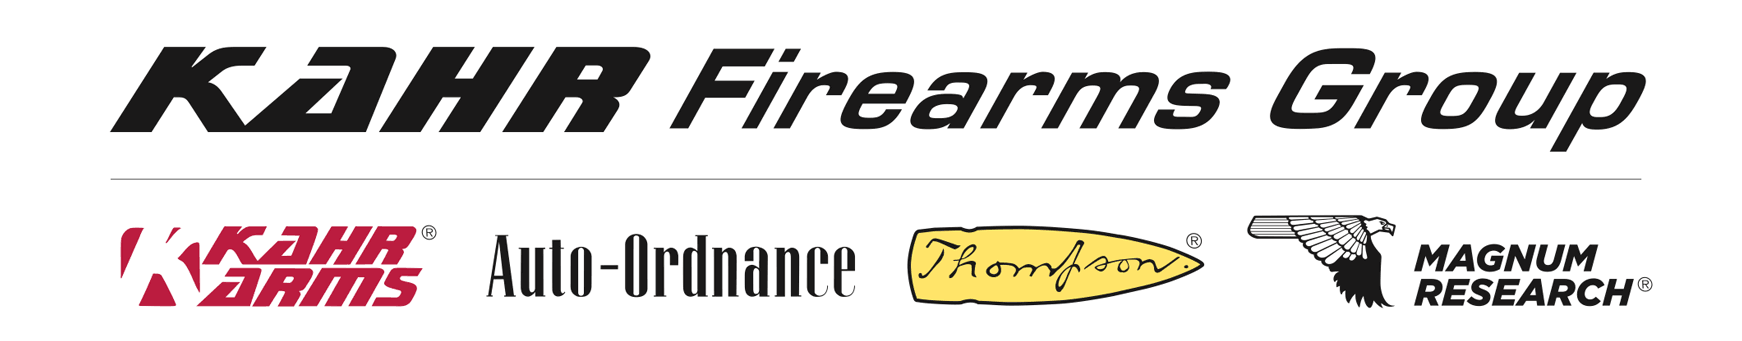 Kahr Firearms Group Logo, PDF